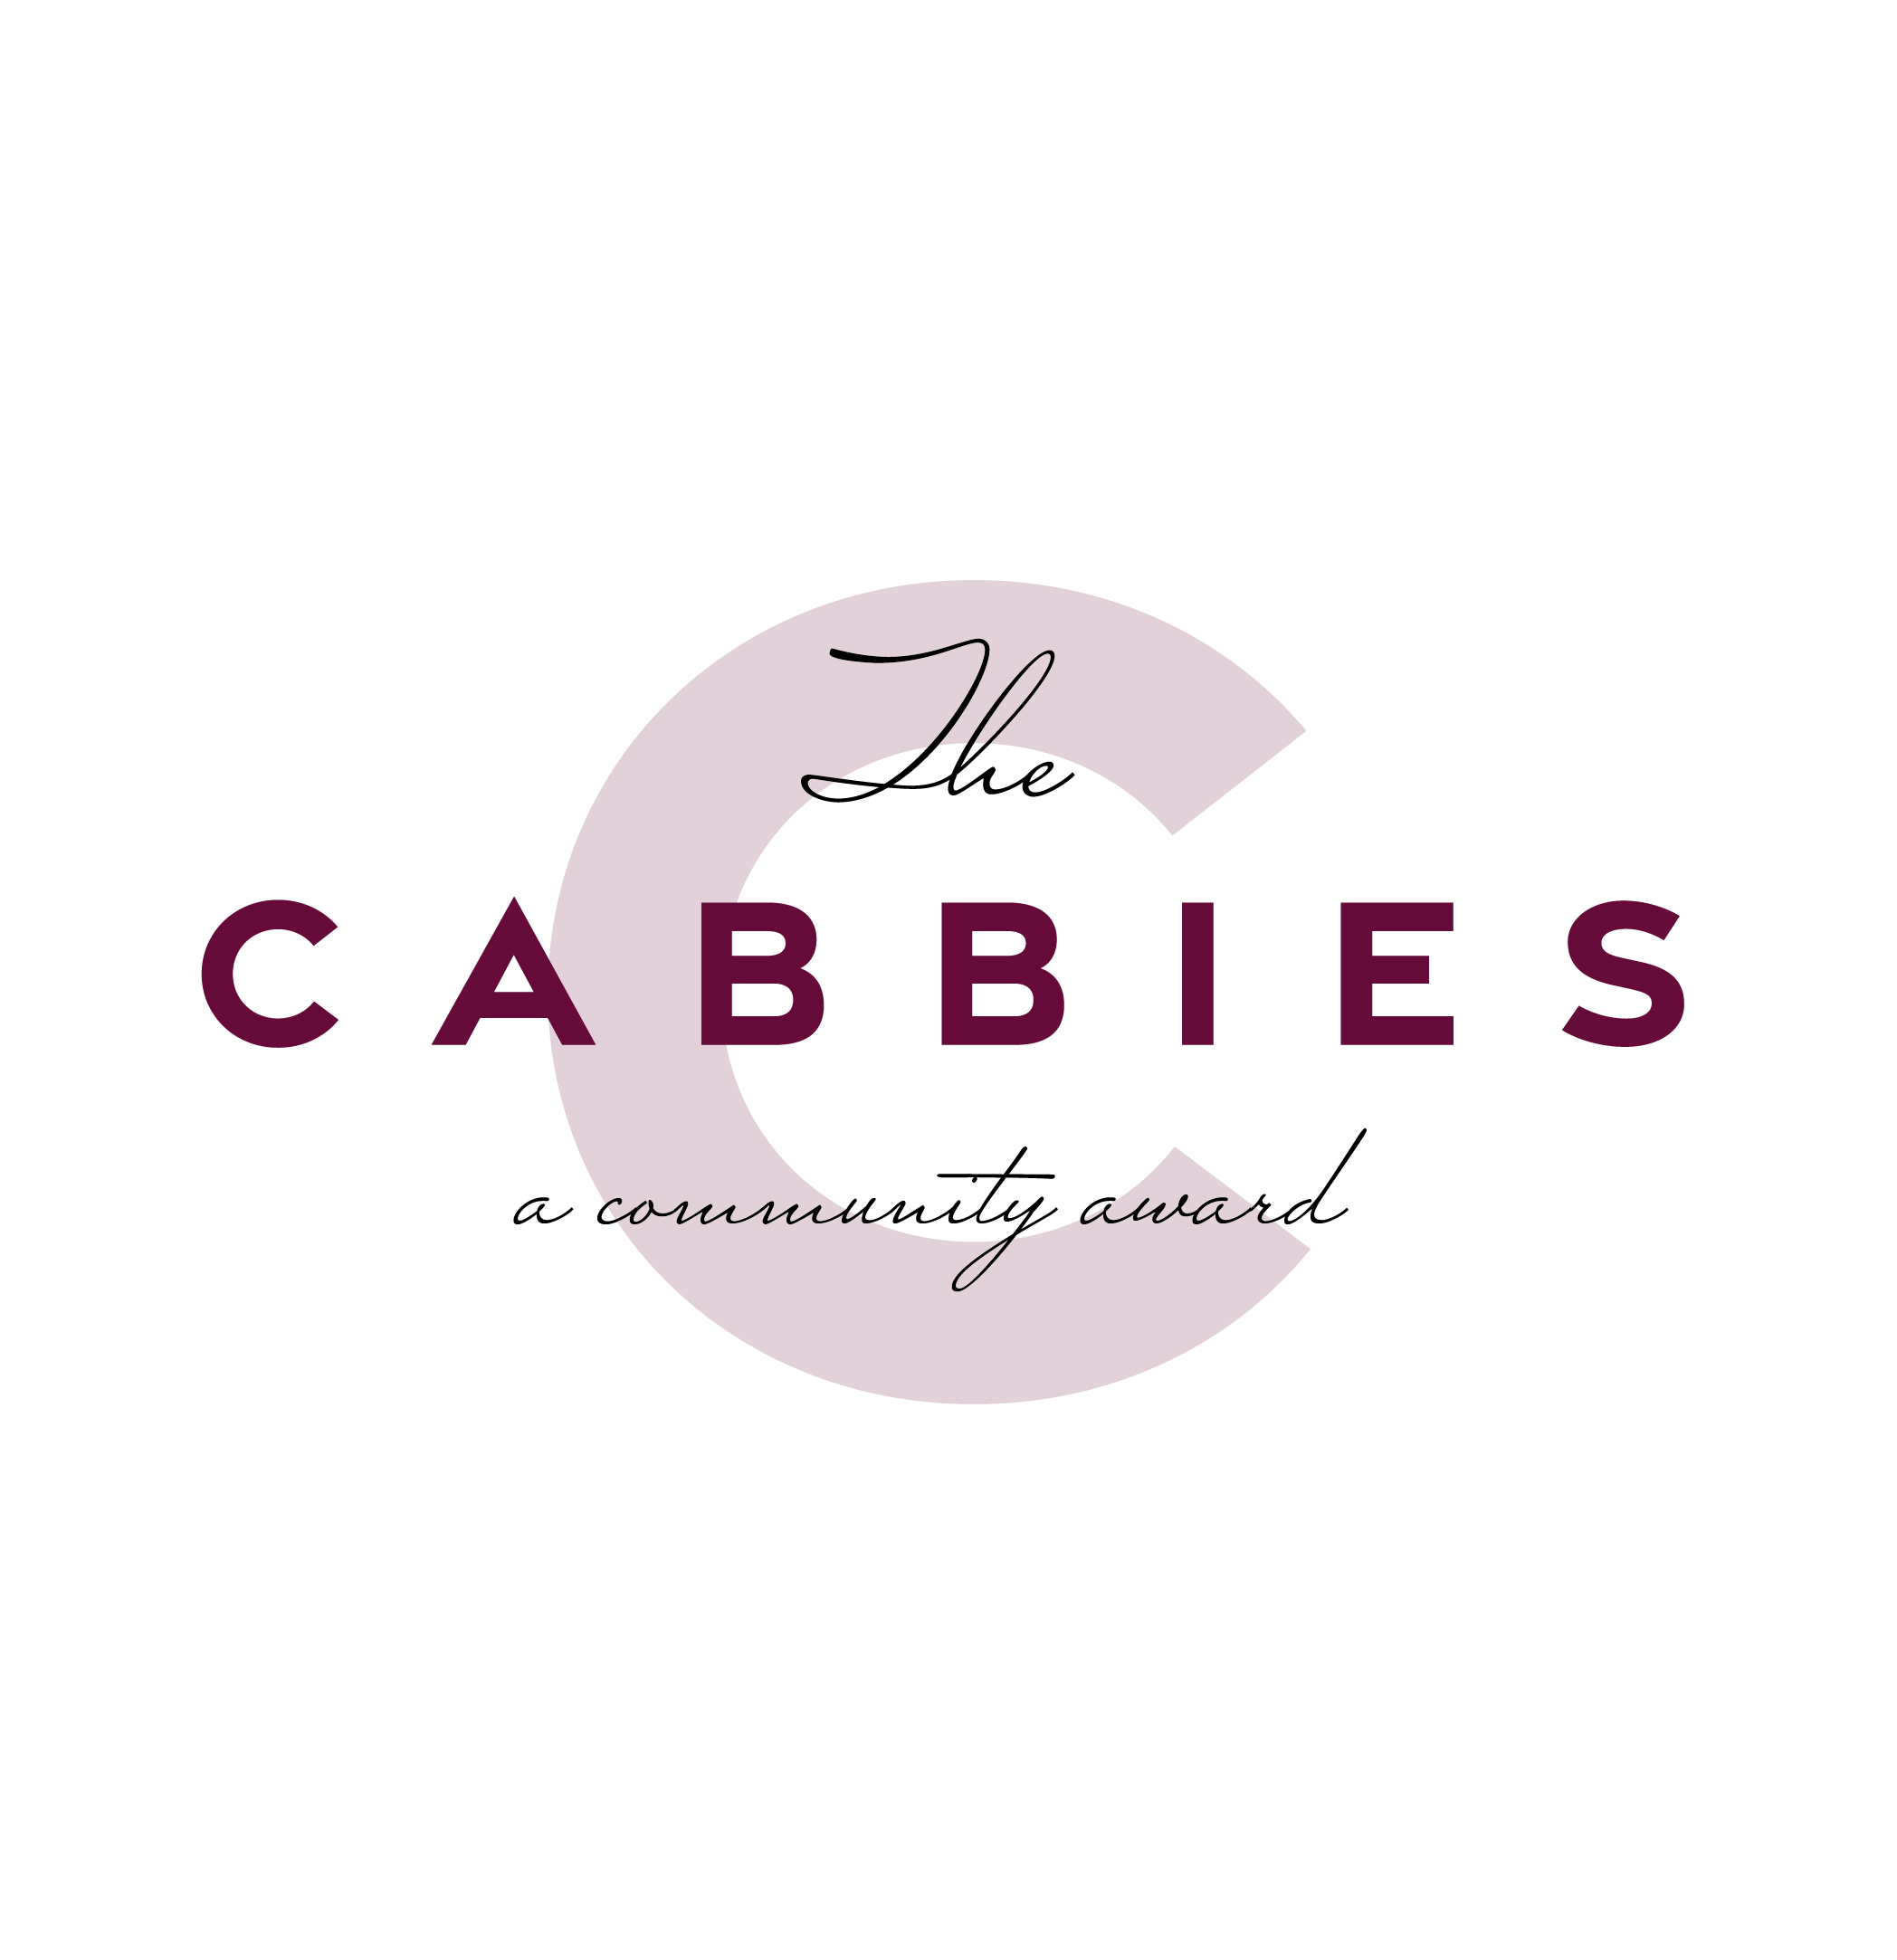 The Cabbies logo - a community award